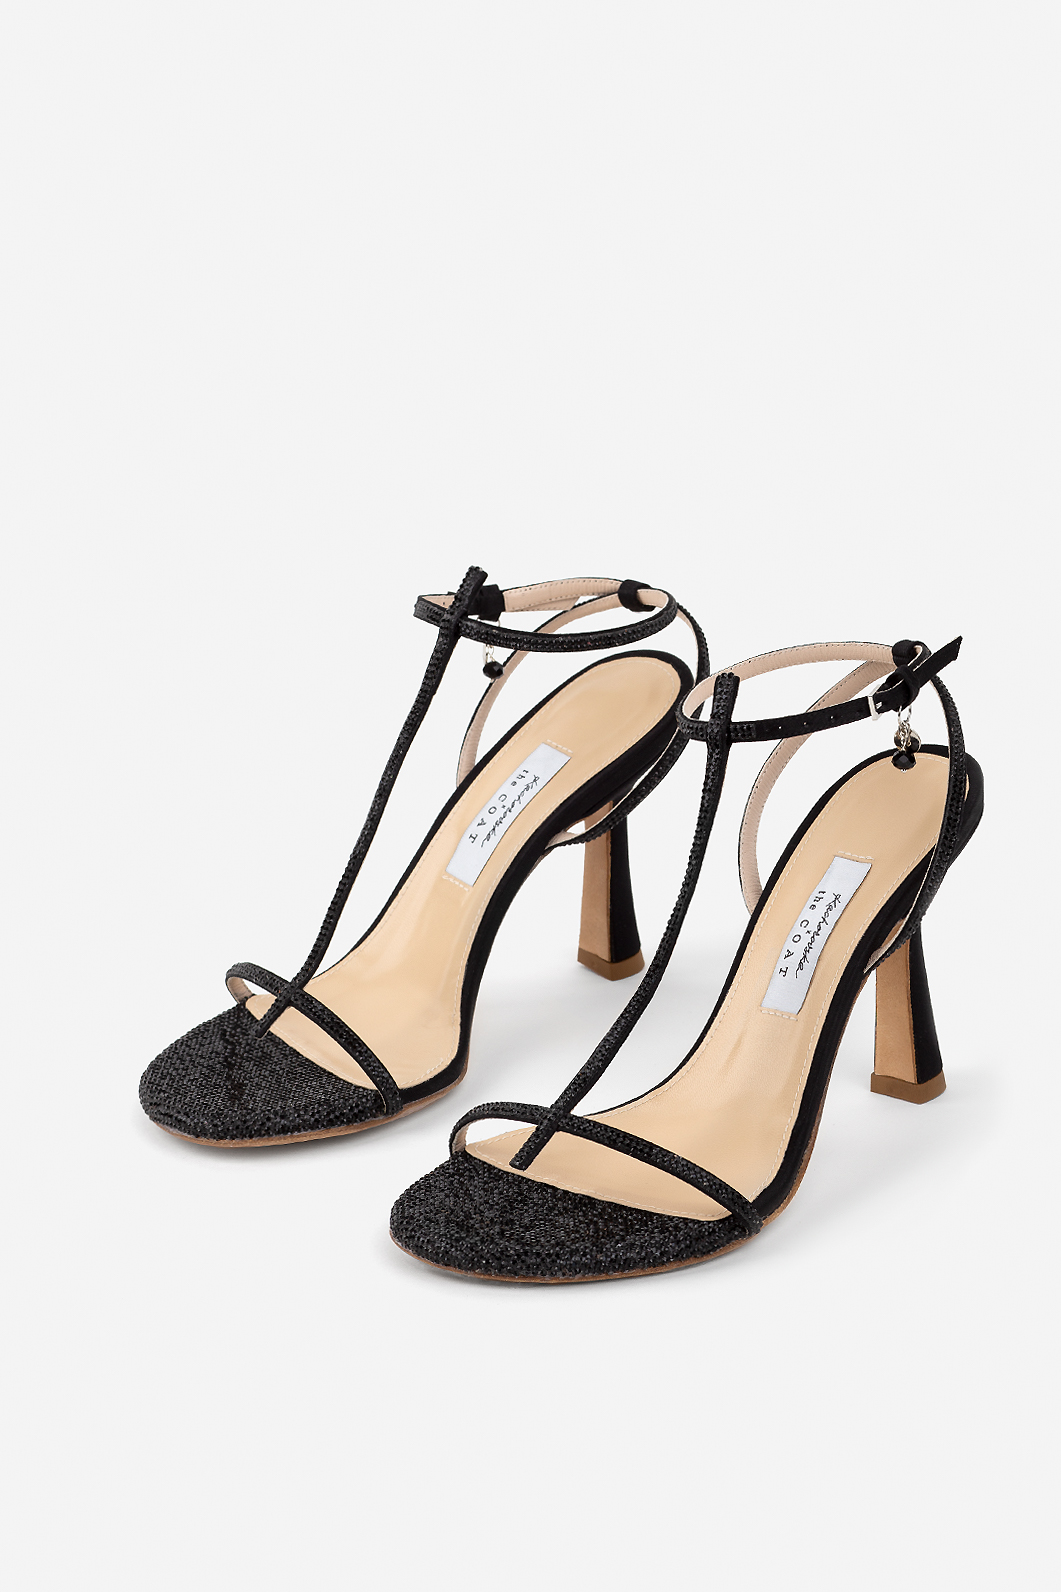 Katya Sparkling black satin
sandals /9 cm/